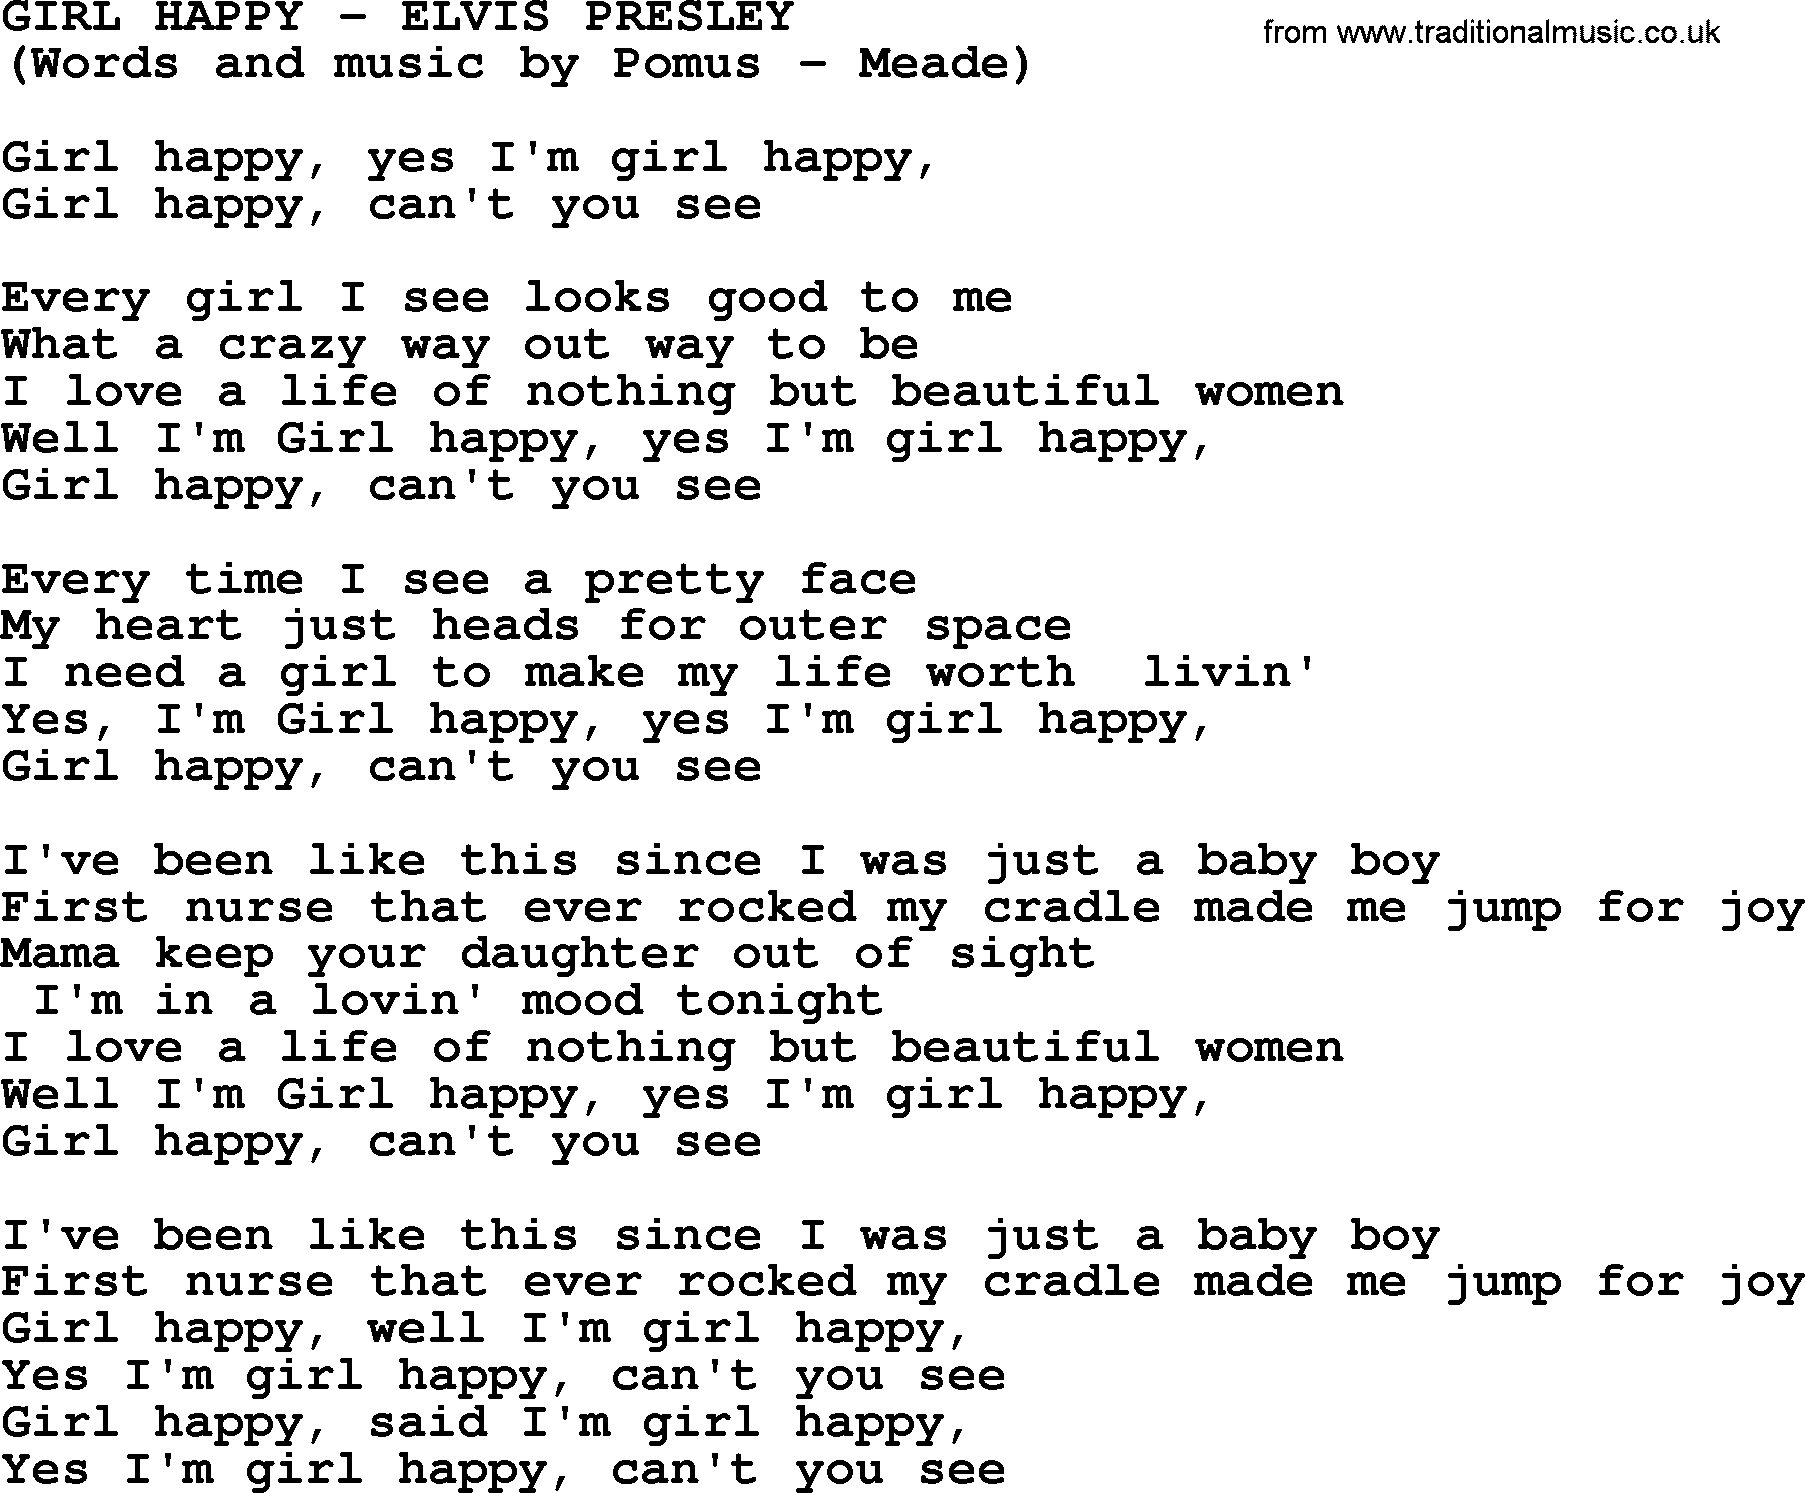 Elvis Presley song: Girl Happy lyrics